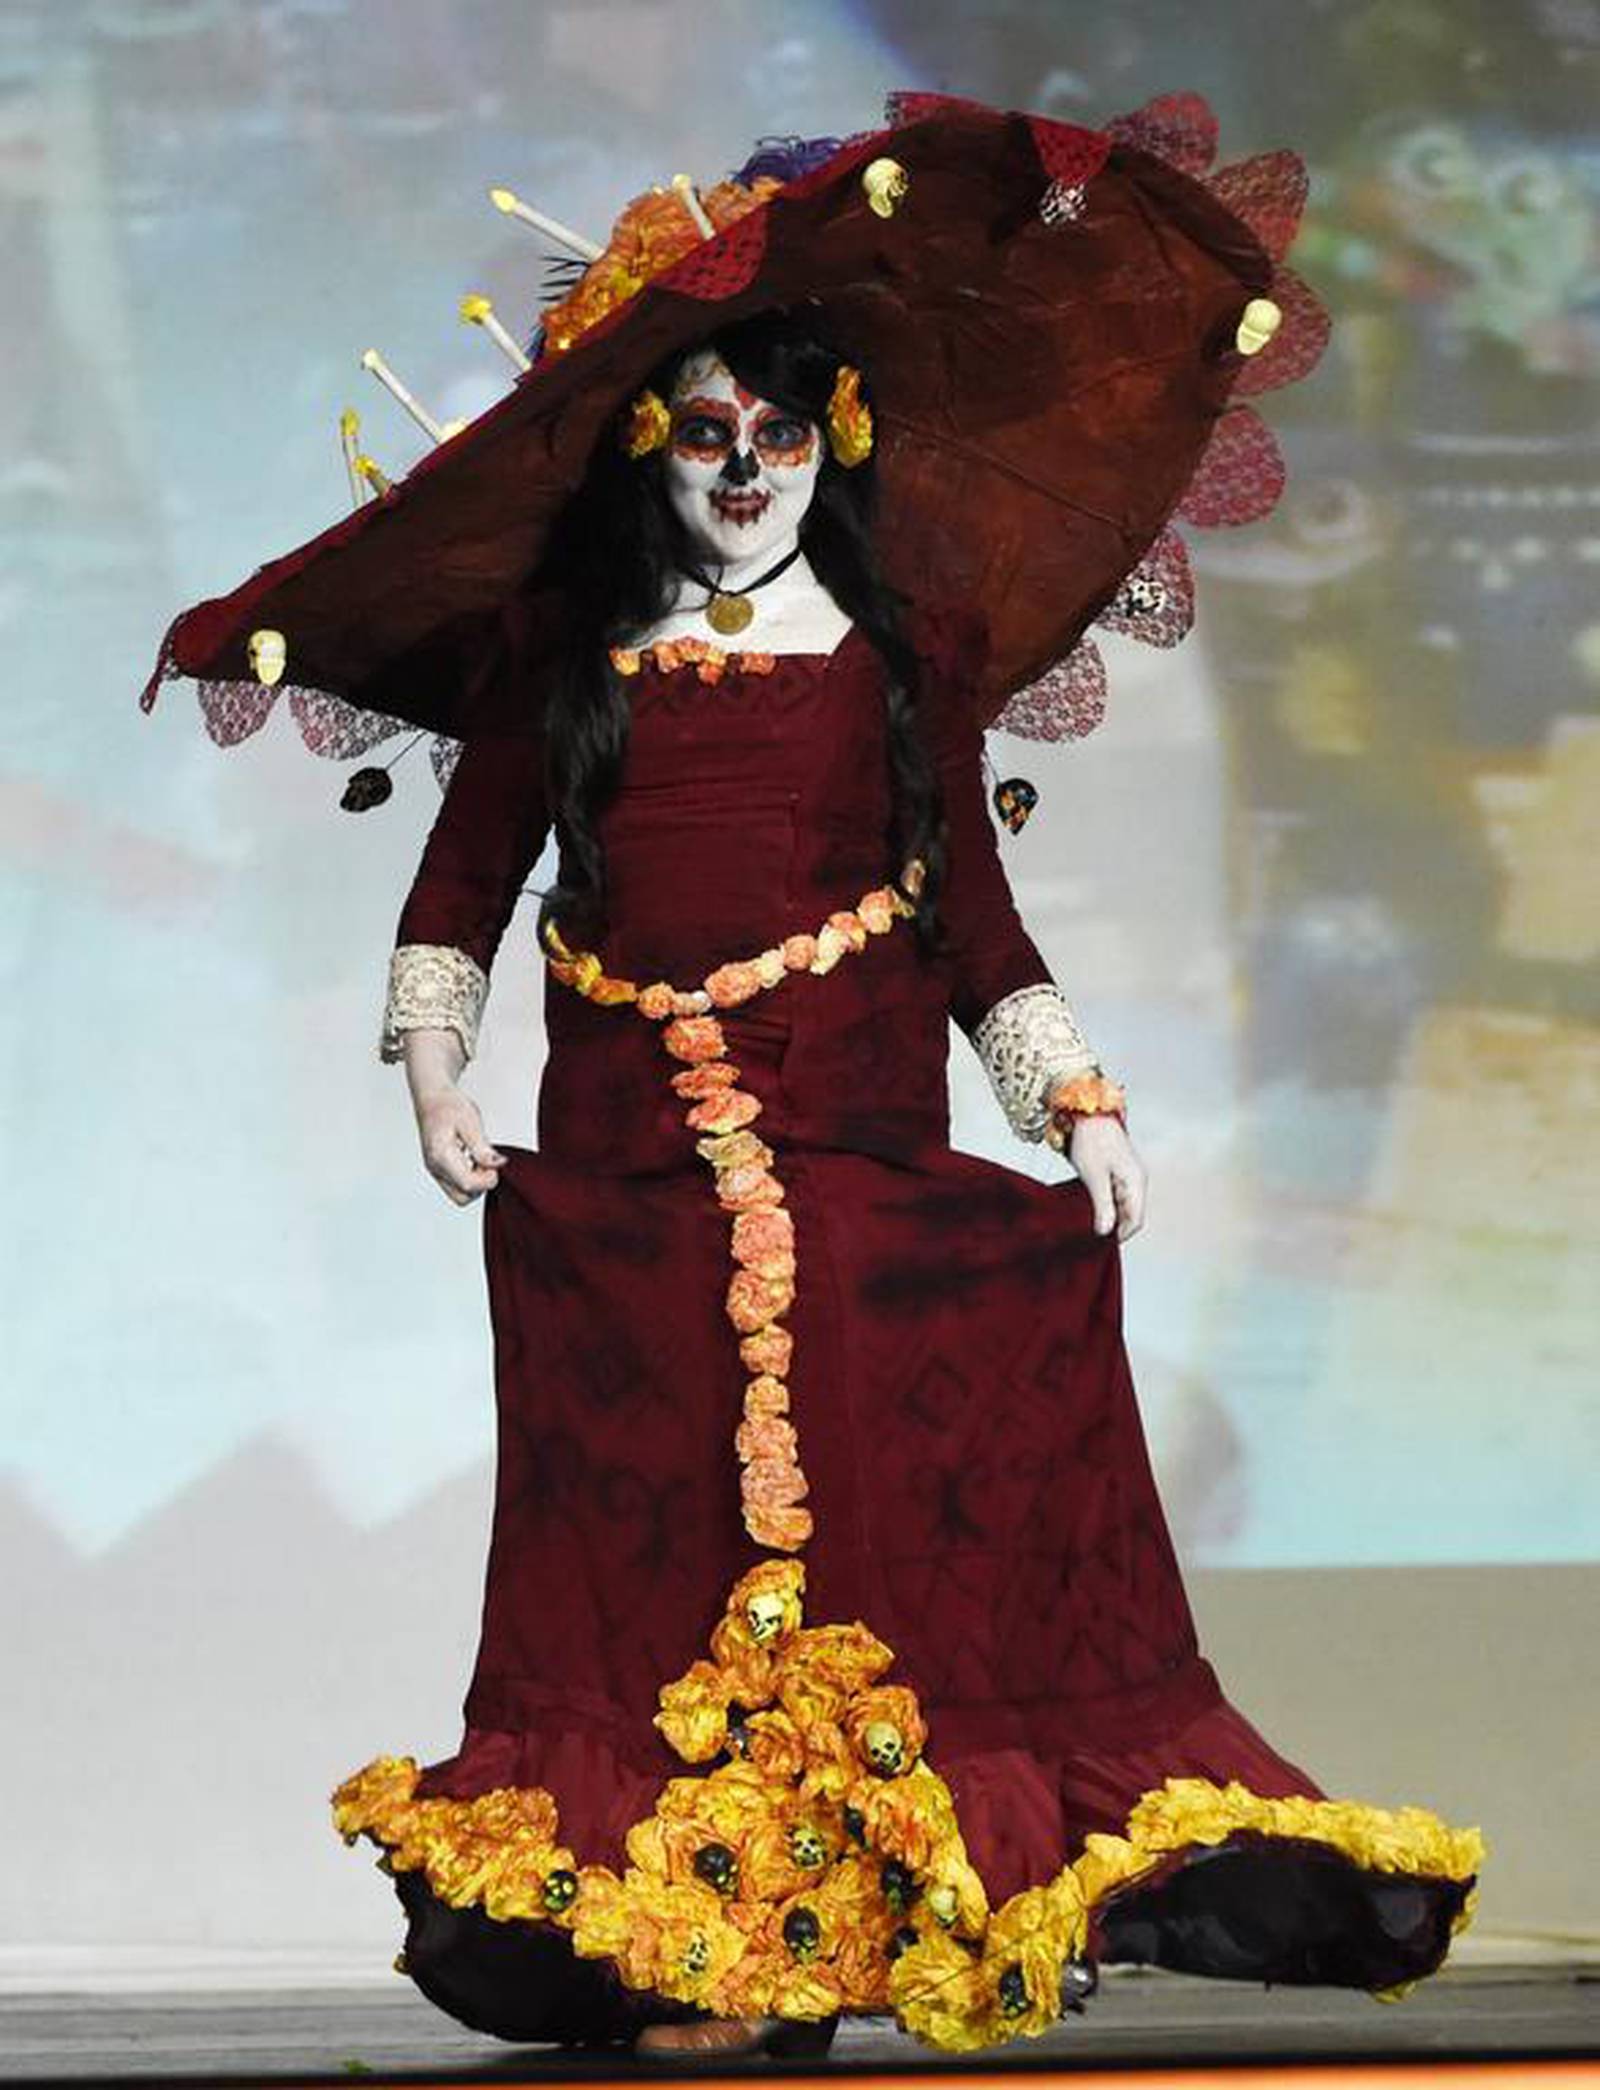 ComicCon Masquerade costume competition in pictures